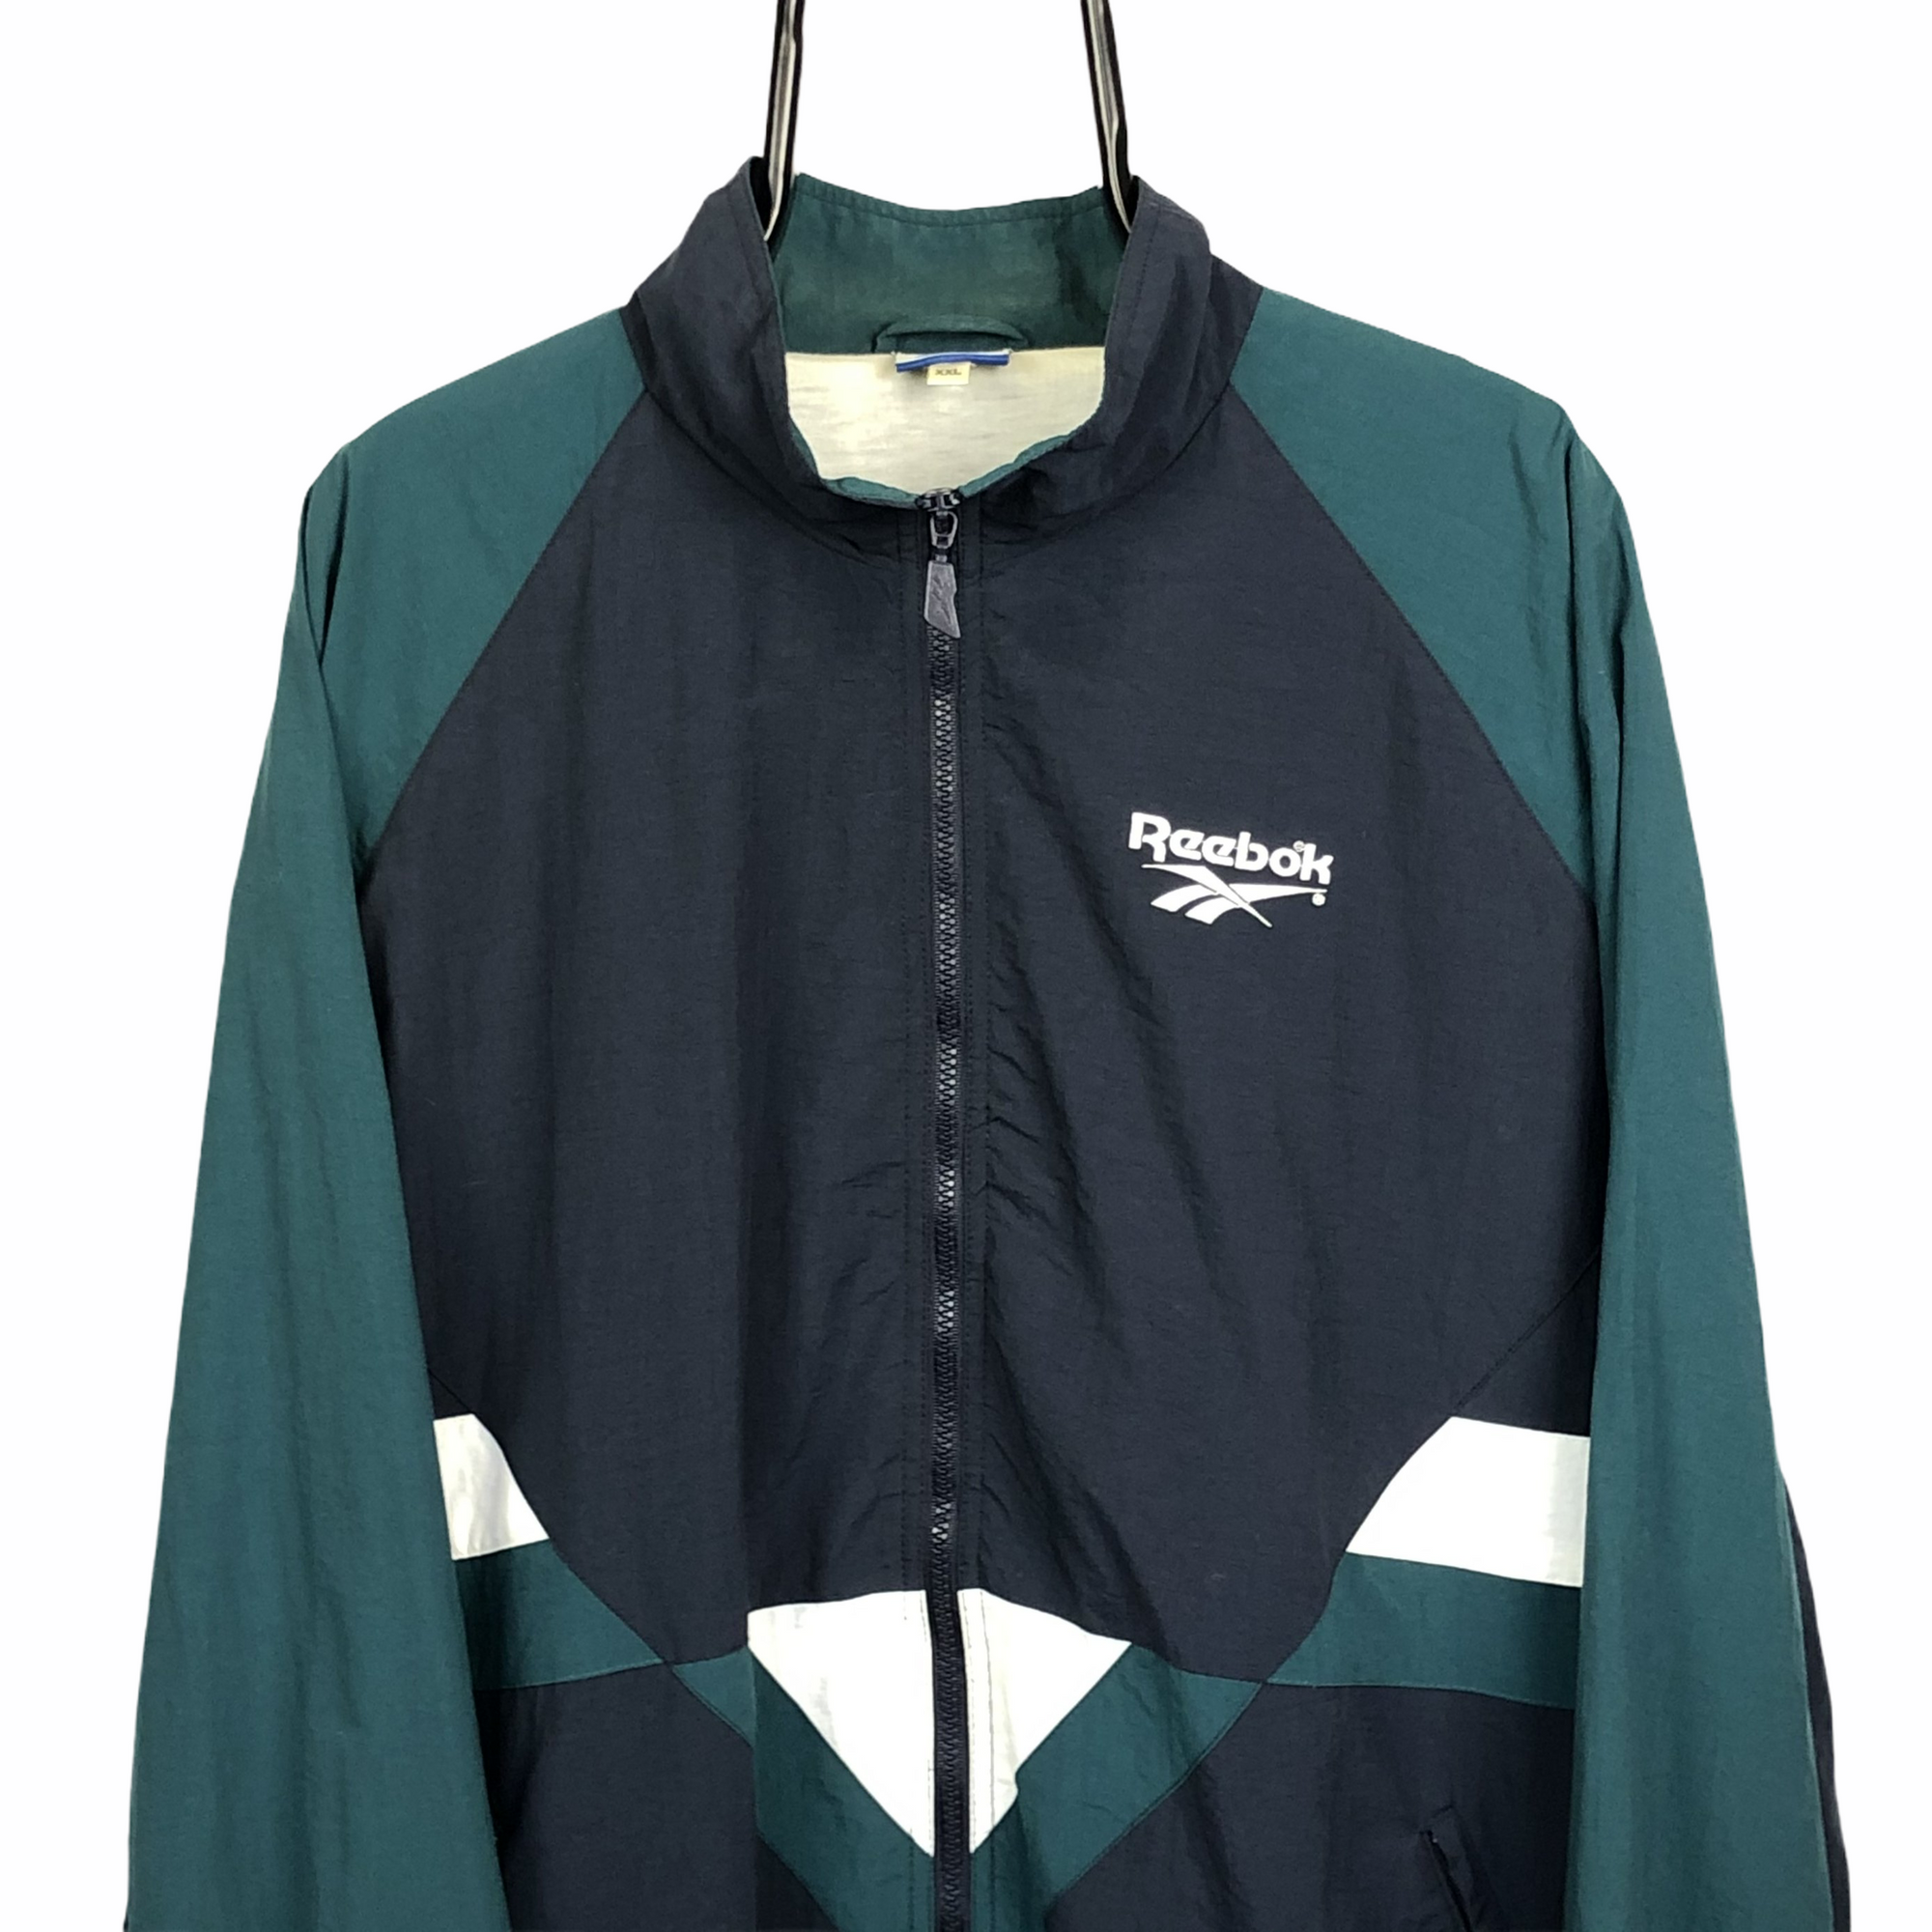 Vintage Reebok Track Jacket in Navy, Green & White - Men's XXL/Women's XXXL